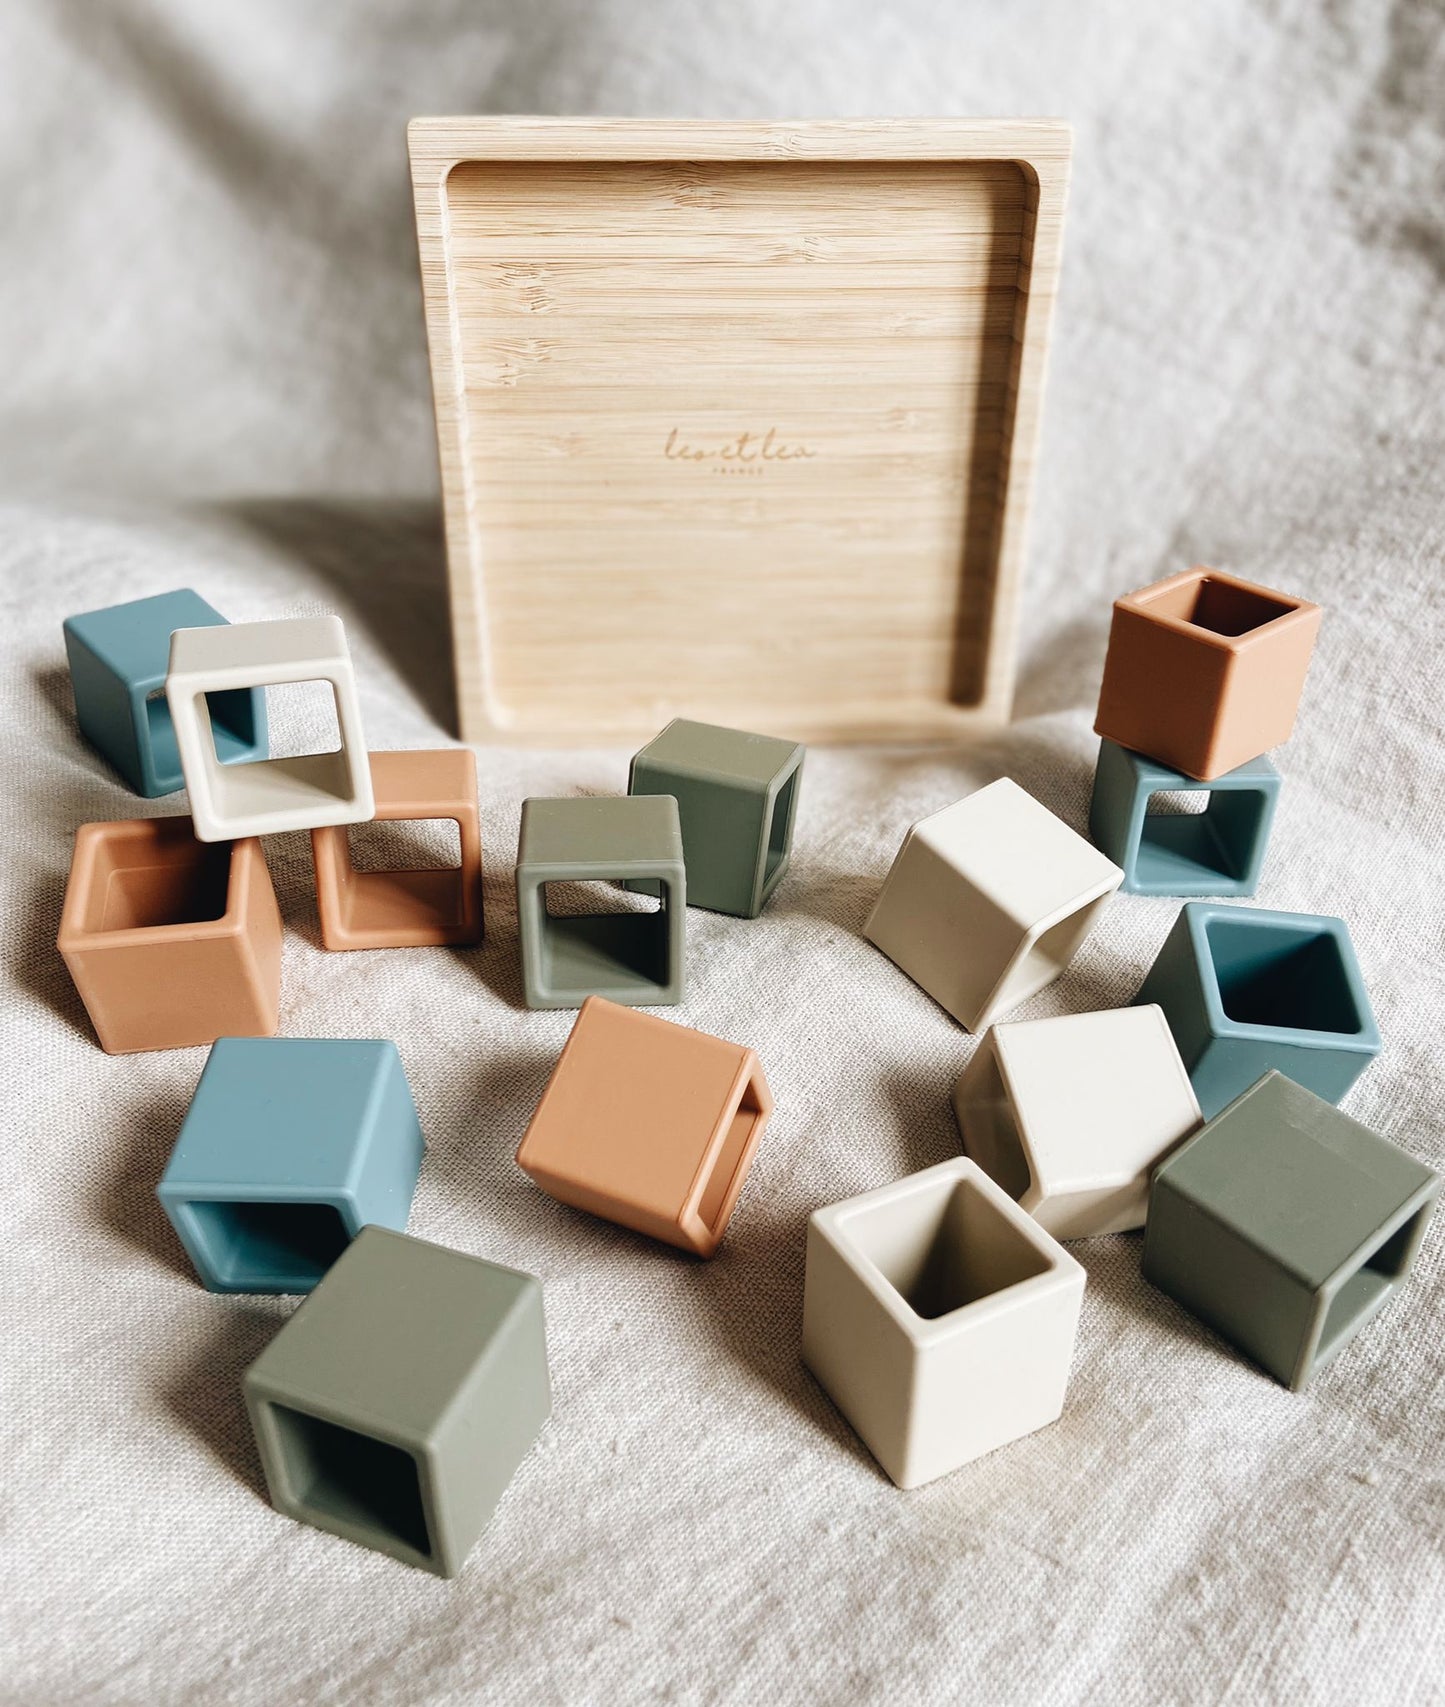 Cube Puzzle, Construction Cubes, Educational Toy